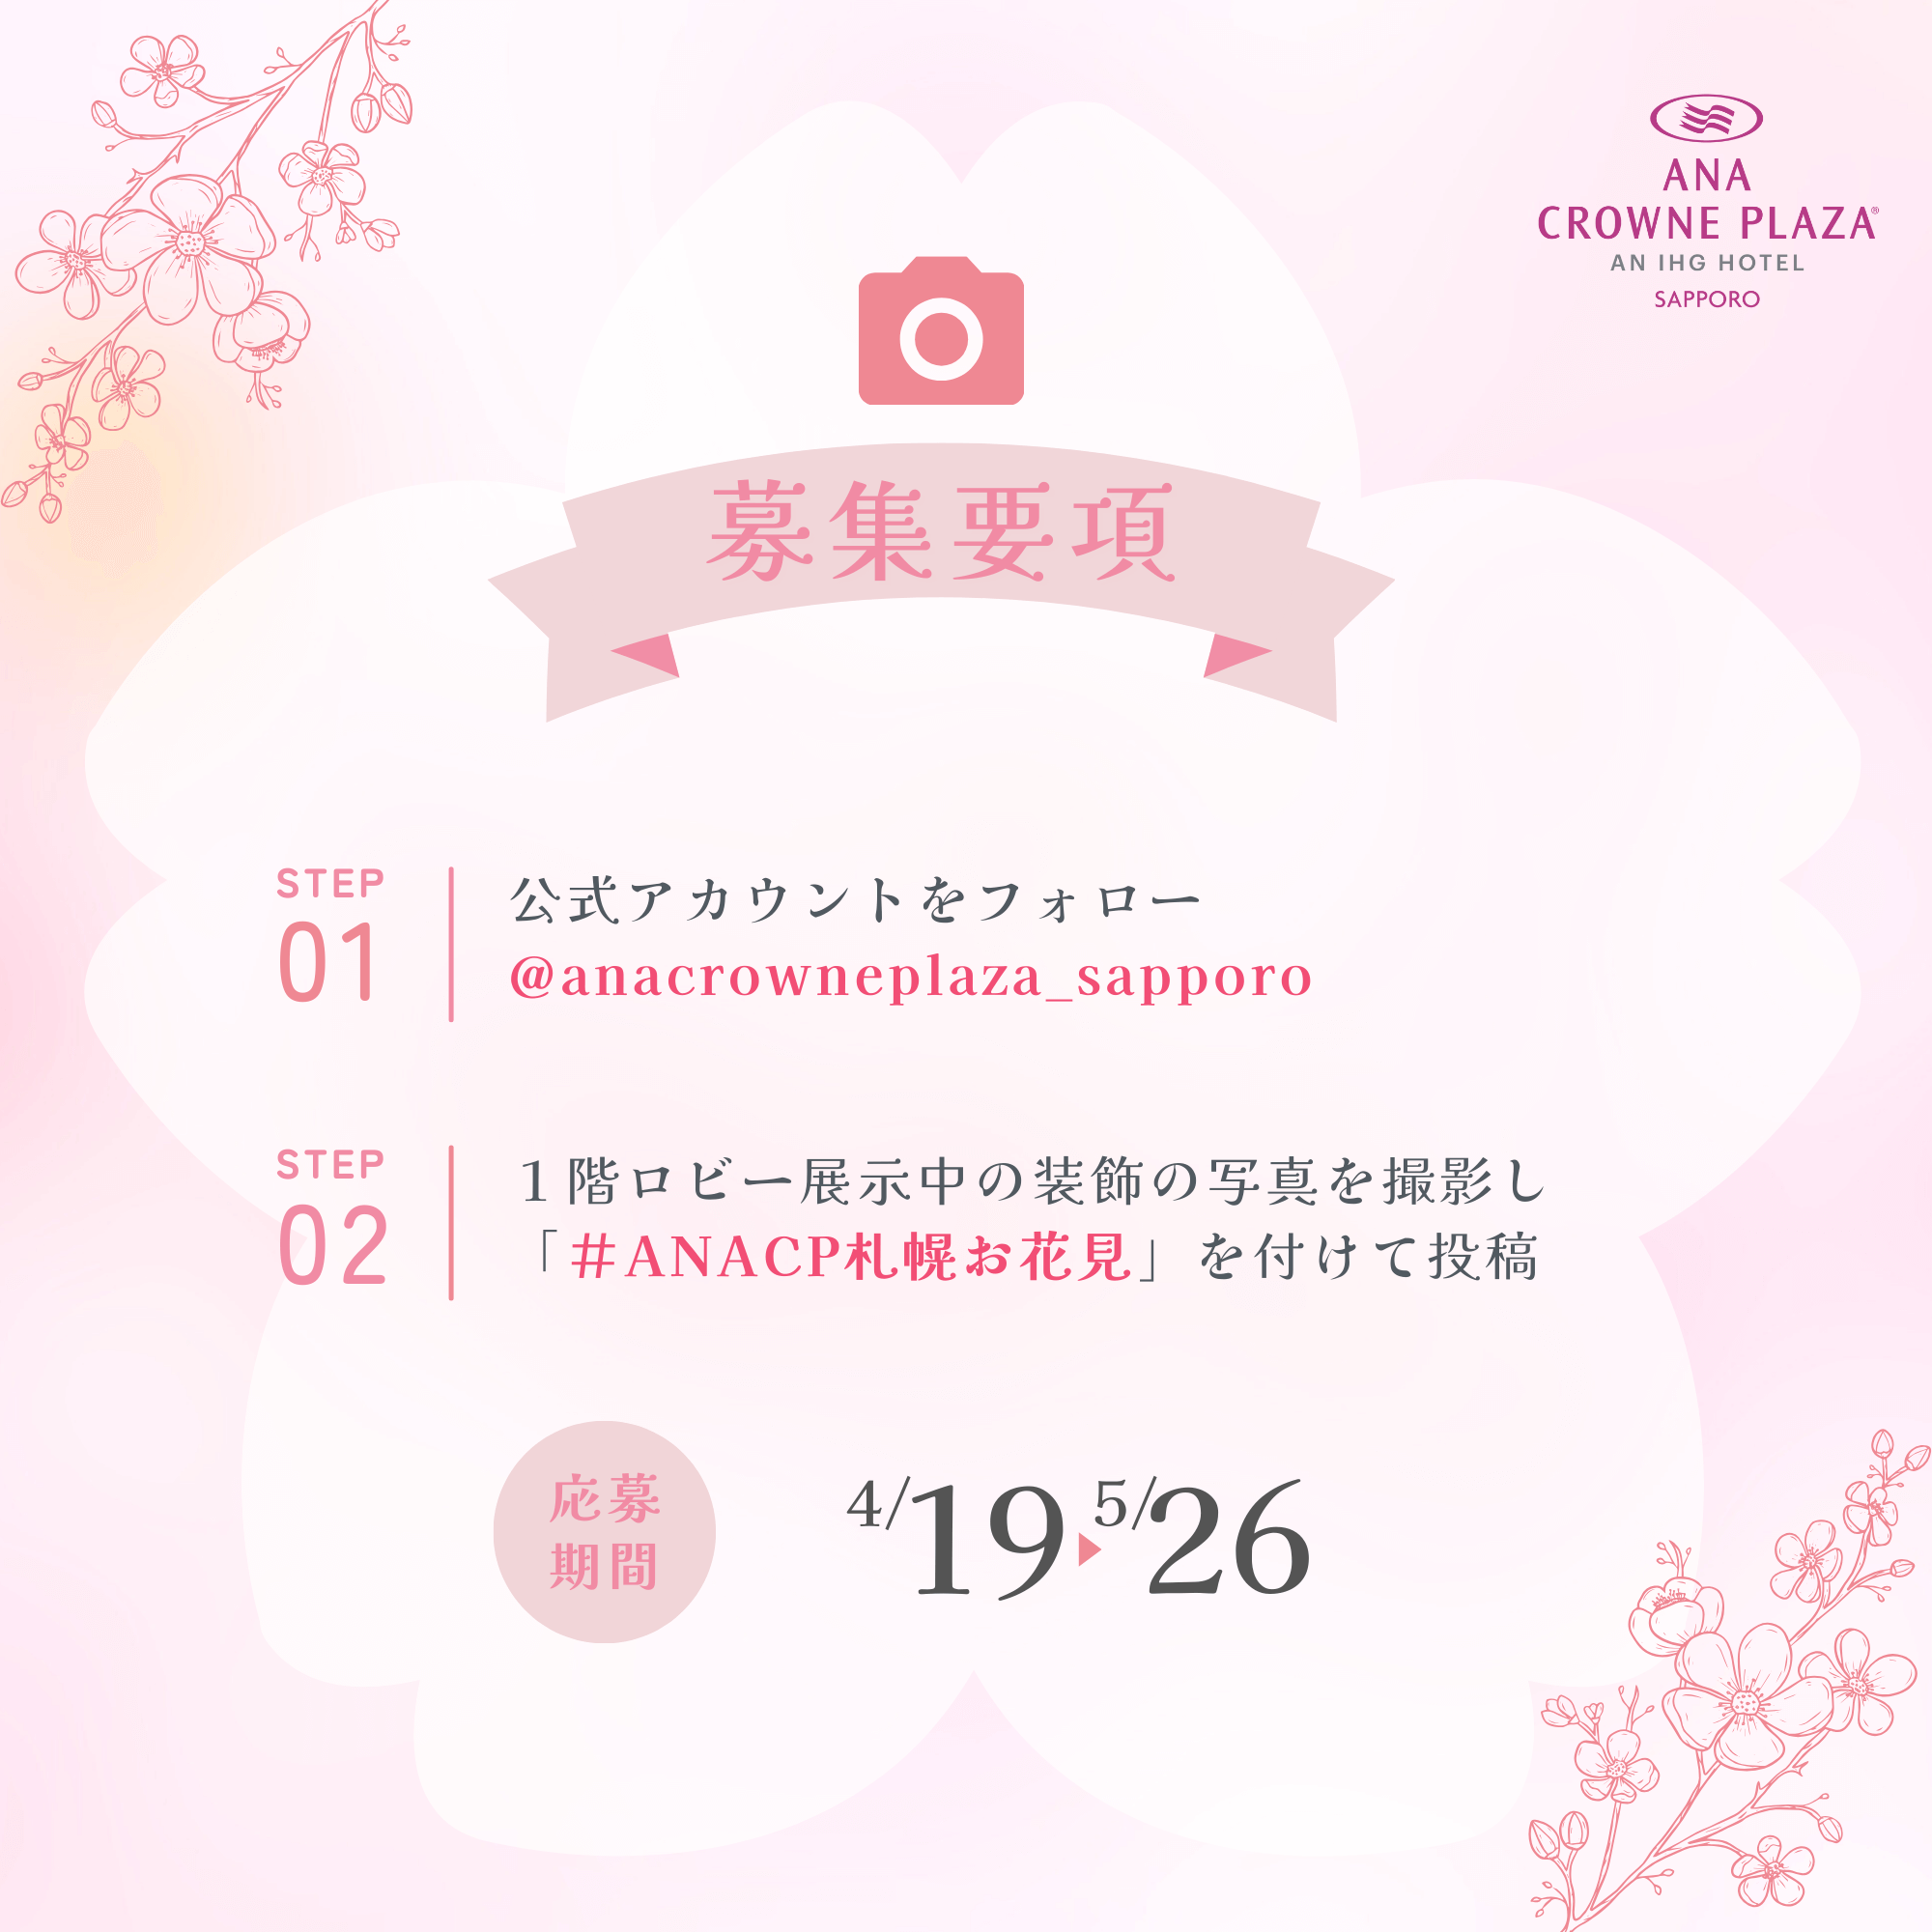 ANAクラウンプラザホテル札幌の『桜フォトコンテスト』-インスタグラム